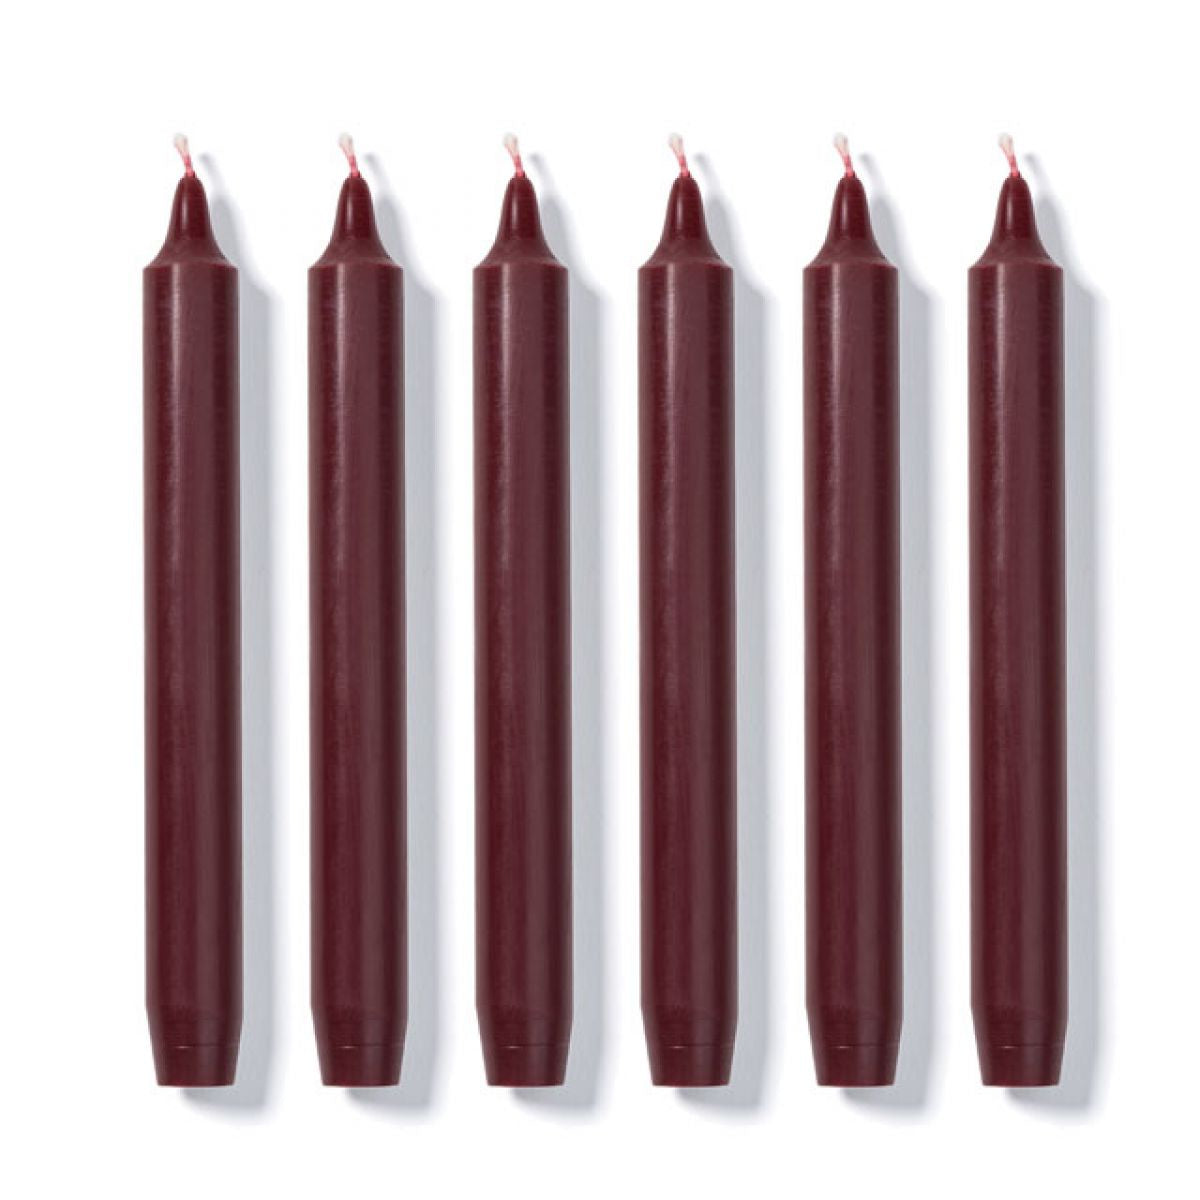 CIRE TRUDON Box of 6 Madeleine Taper Candles: Burgundy